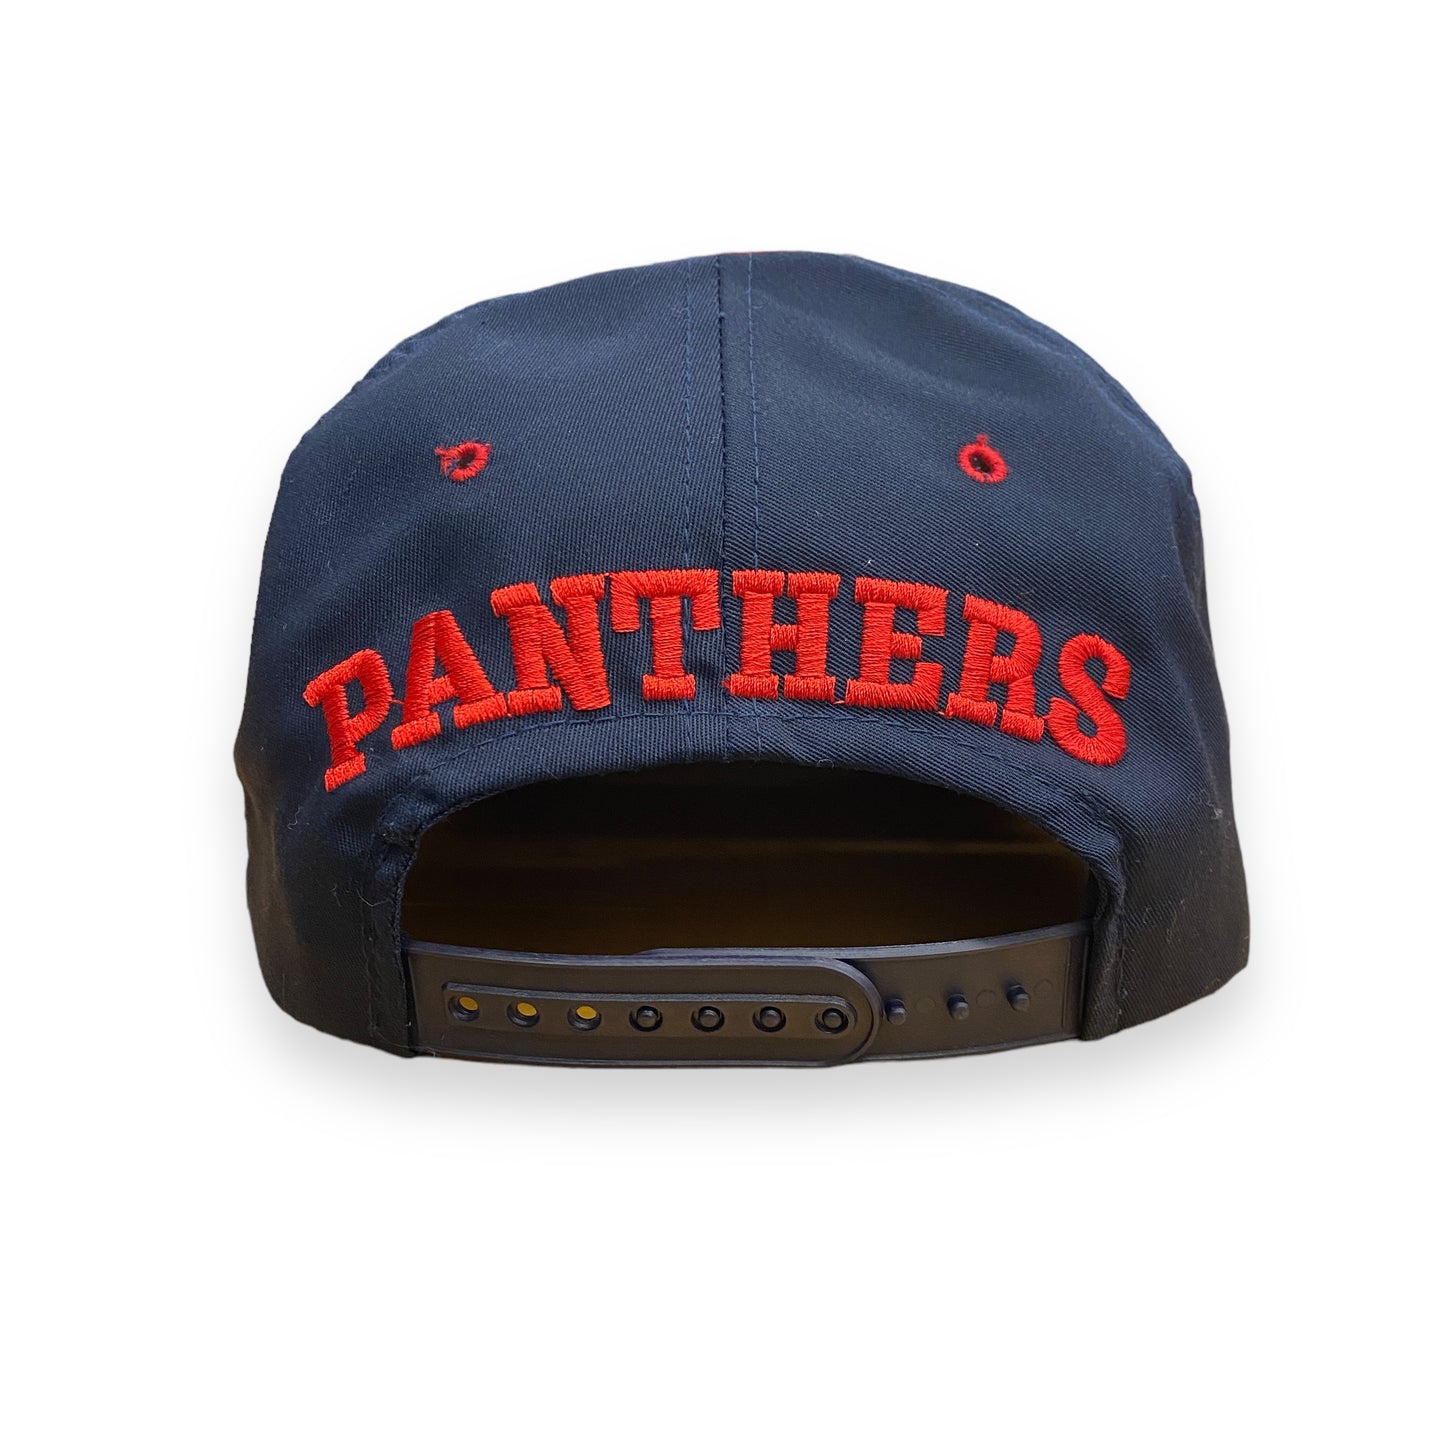 Vintage 1990s Florida Panthers Embroidered Snapback Hat